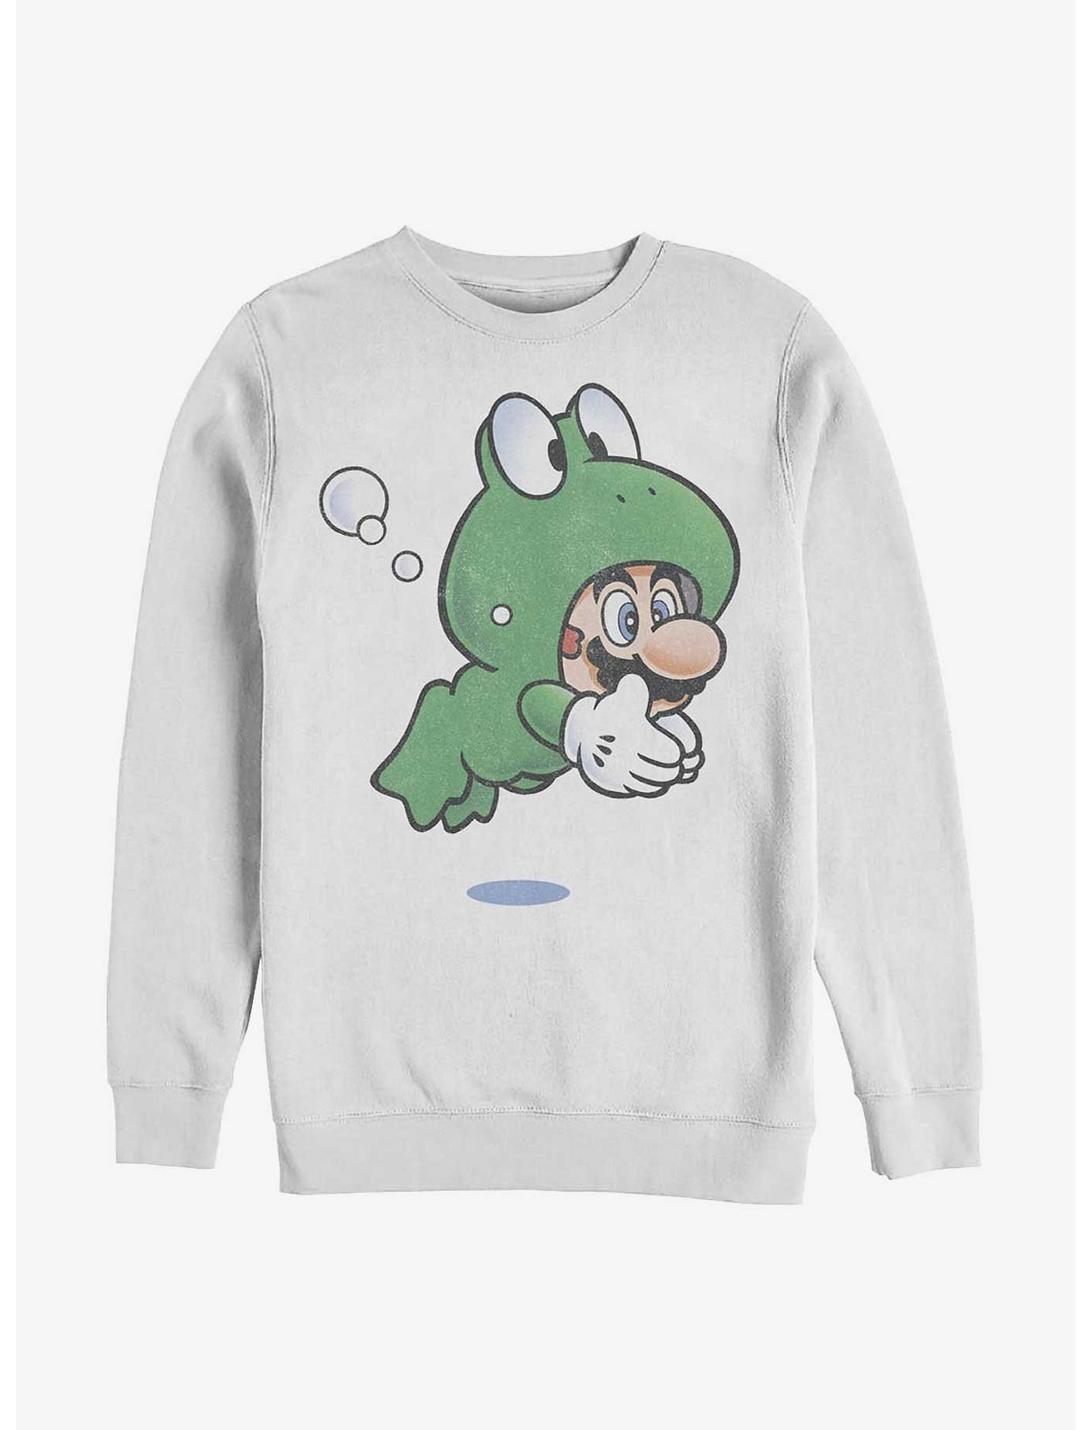 Nintendo Super Mario Bros. Frog Suit Sweatshirt, WHITE, hi-res